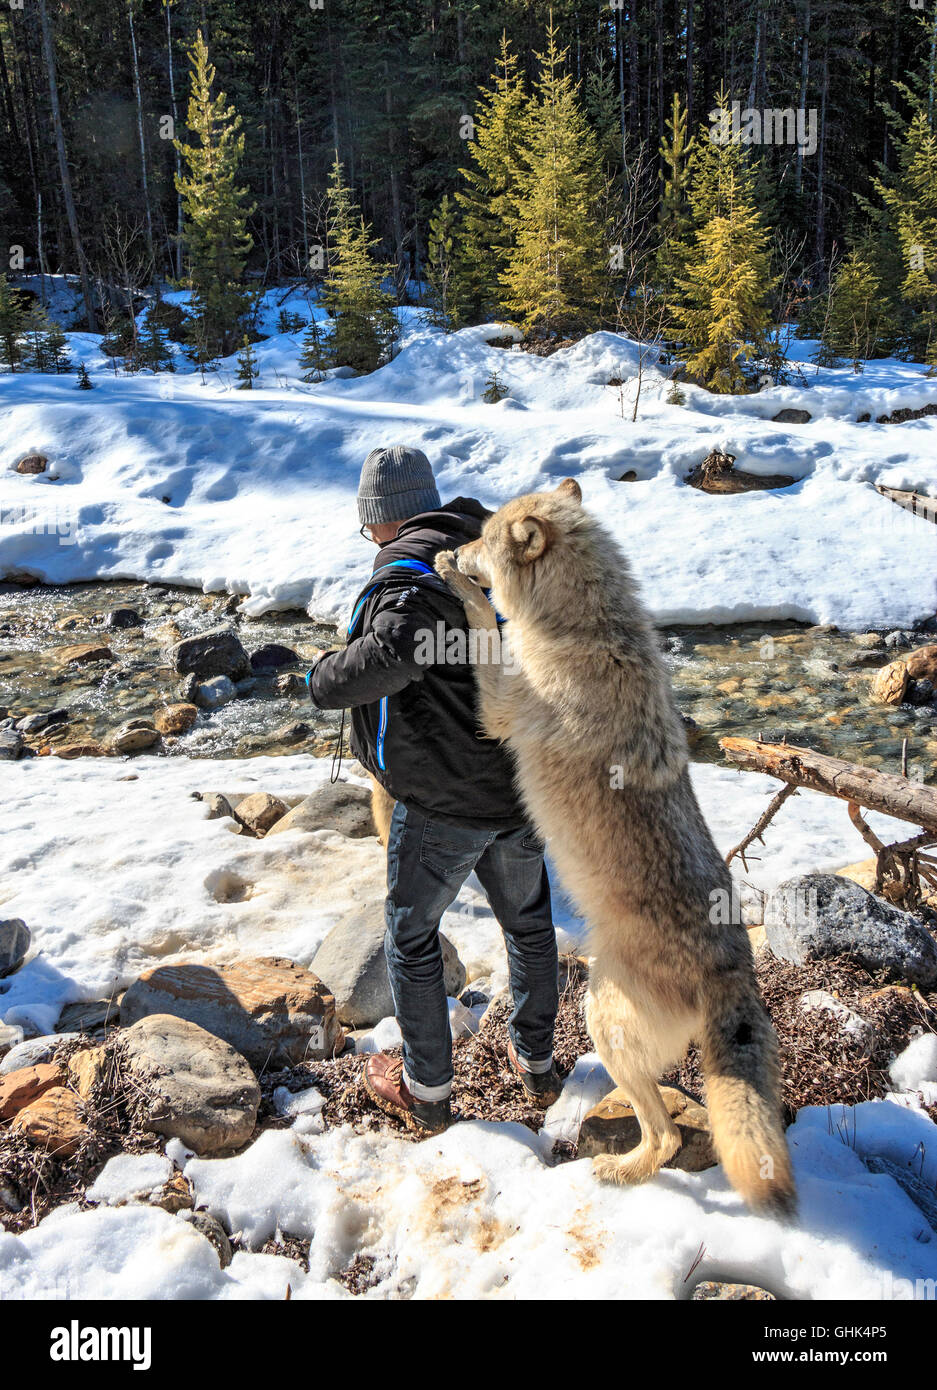 Caminar con lobos fotografías e imágenes de alta resolución - Alamy